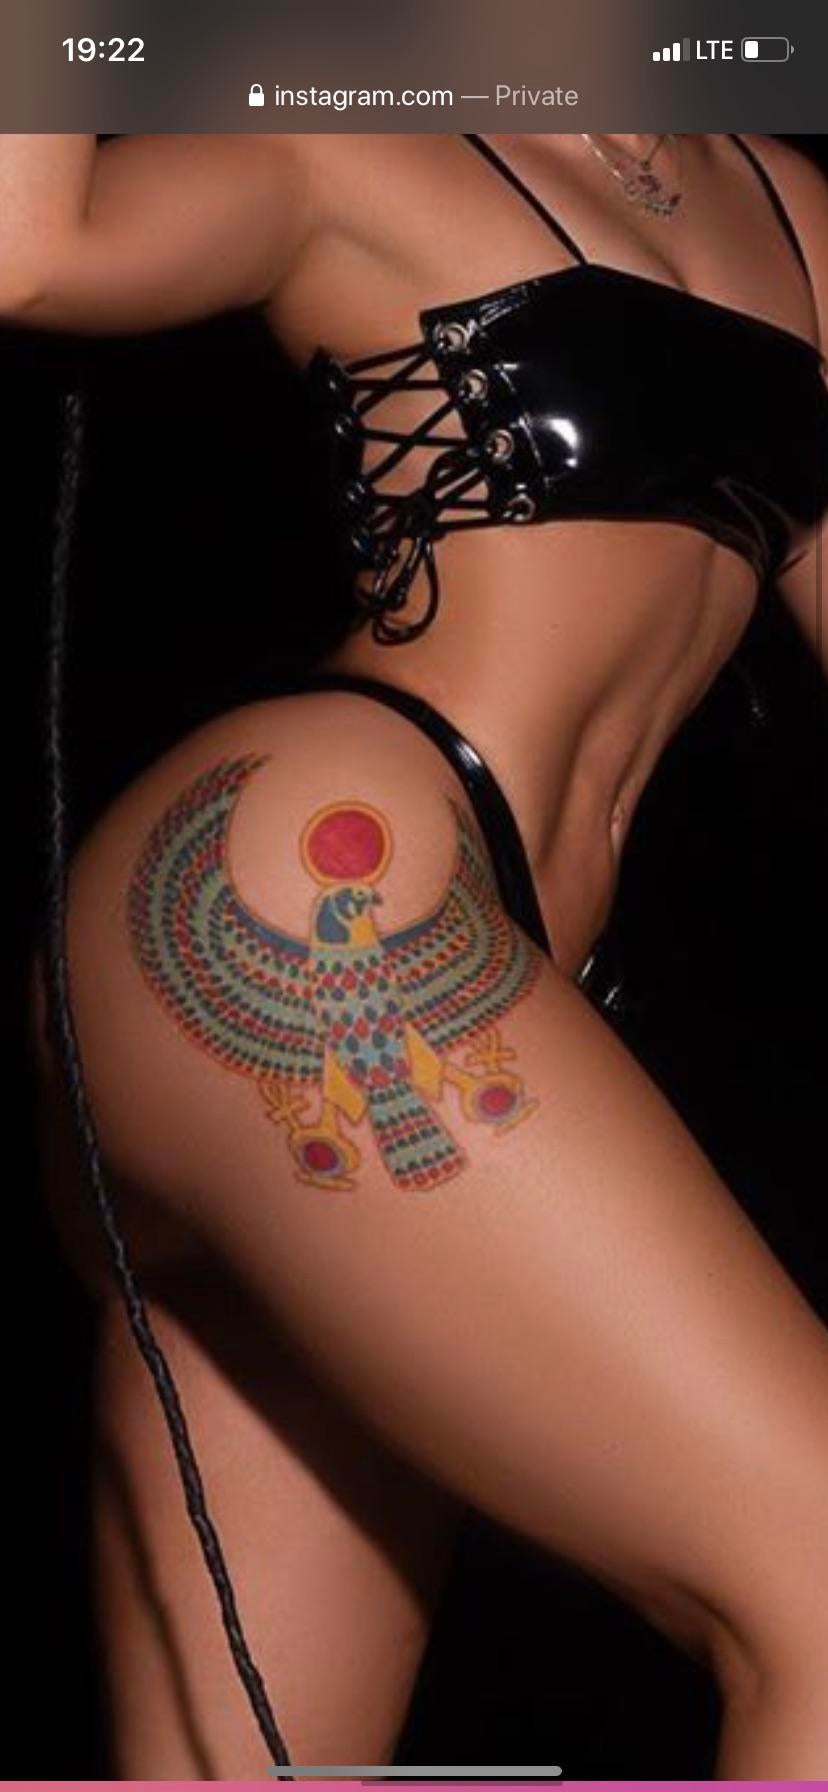 Anyone know the origin of Zahras tattoo